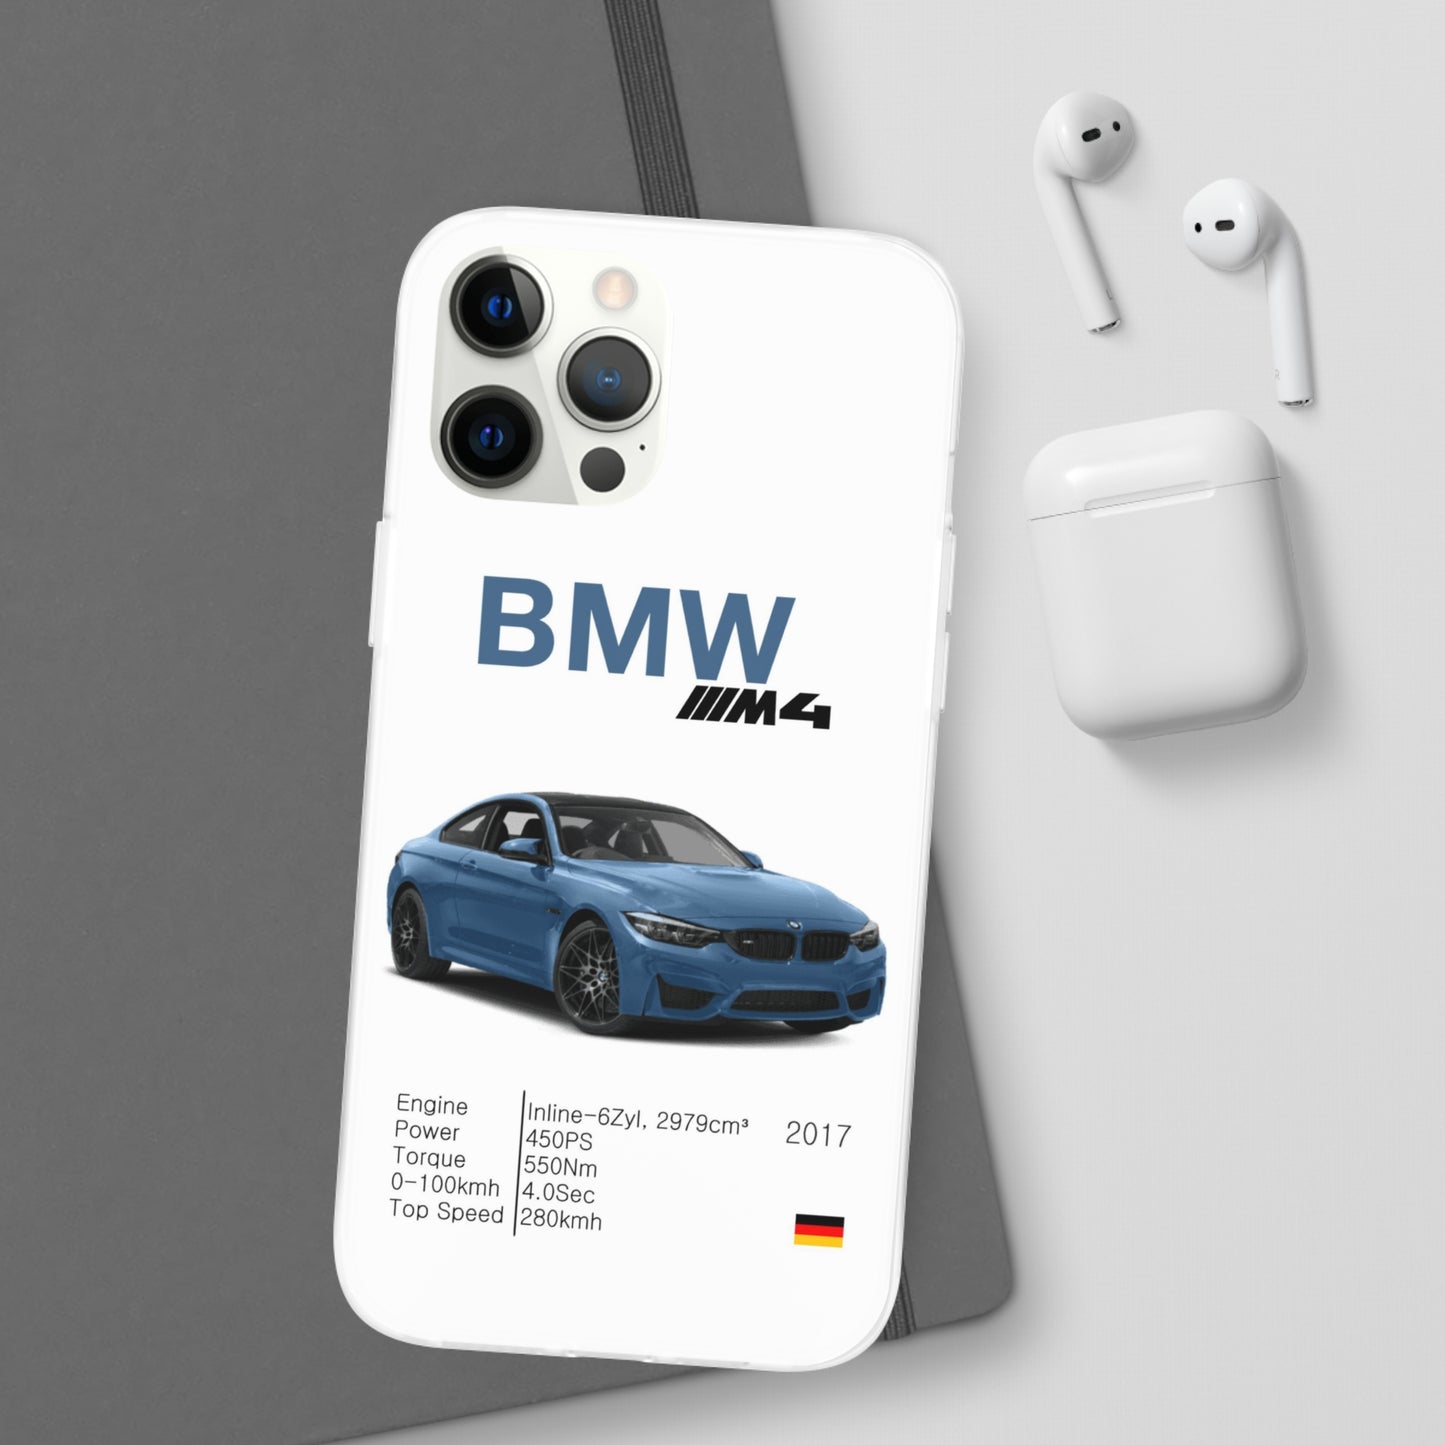 BMW M4 Phone Case